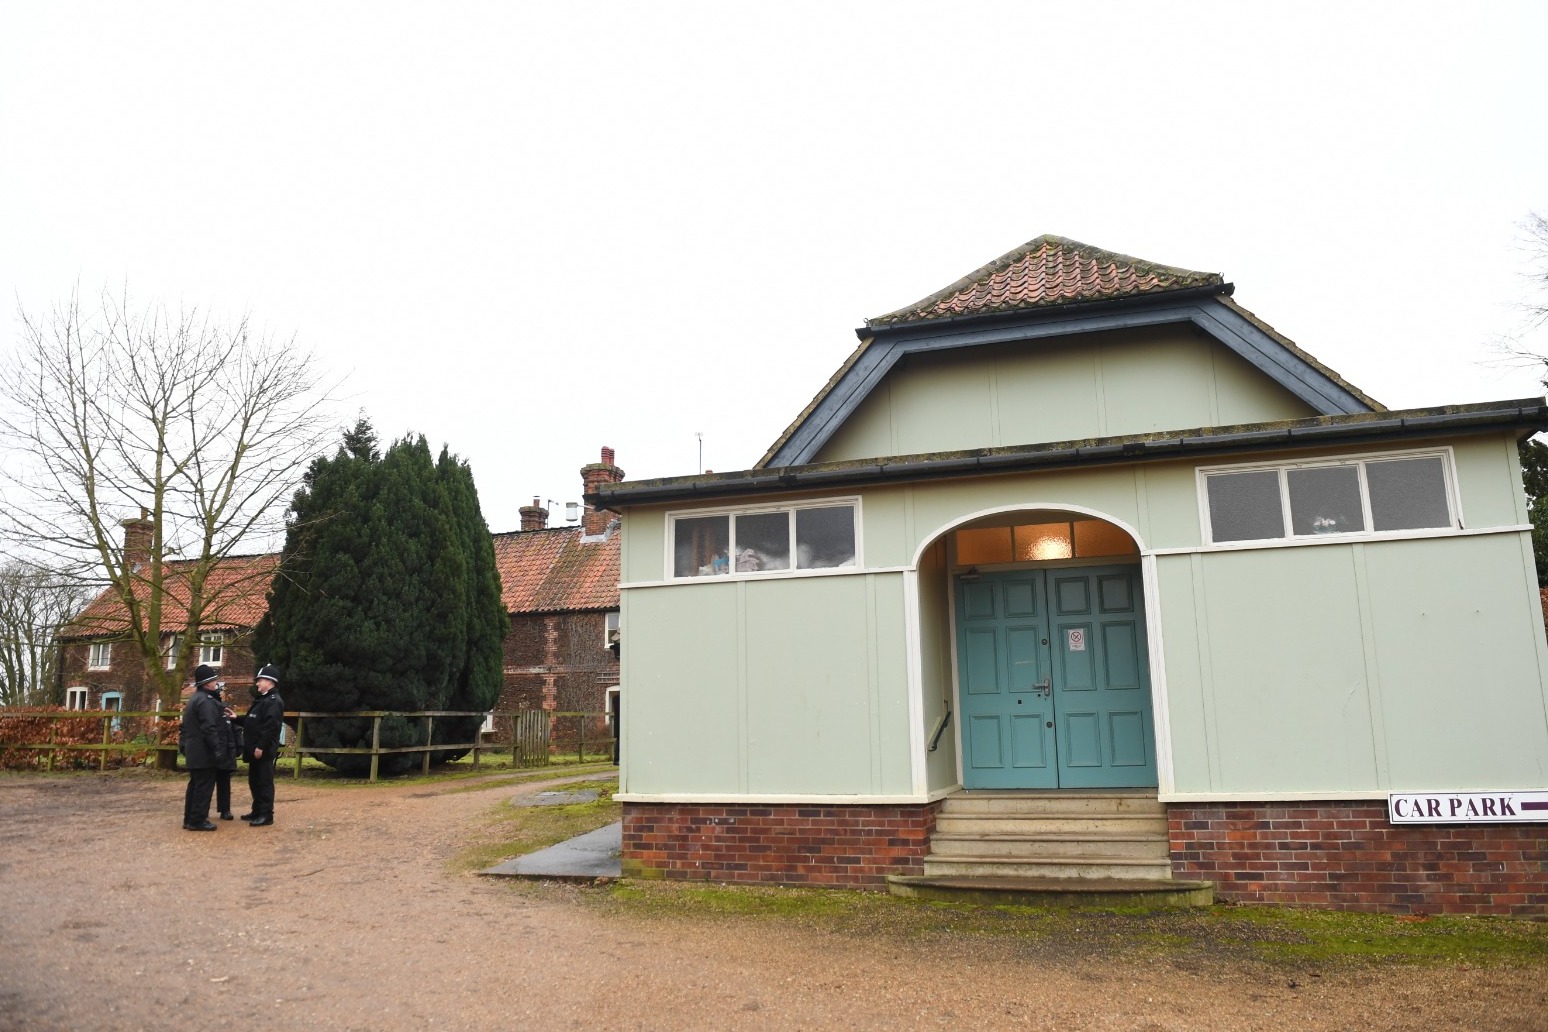 £3m Jubilee fund announced to improve village halls 